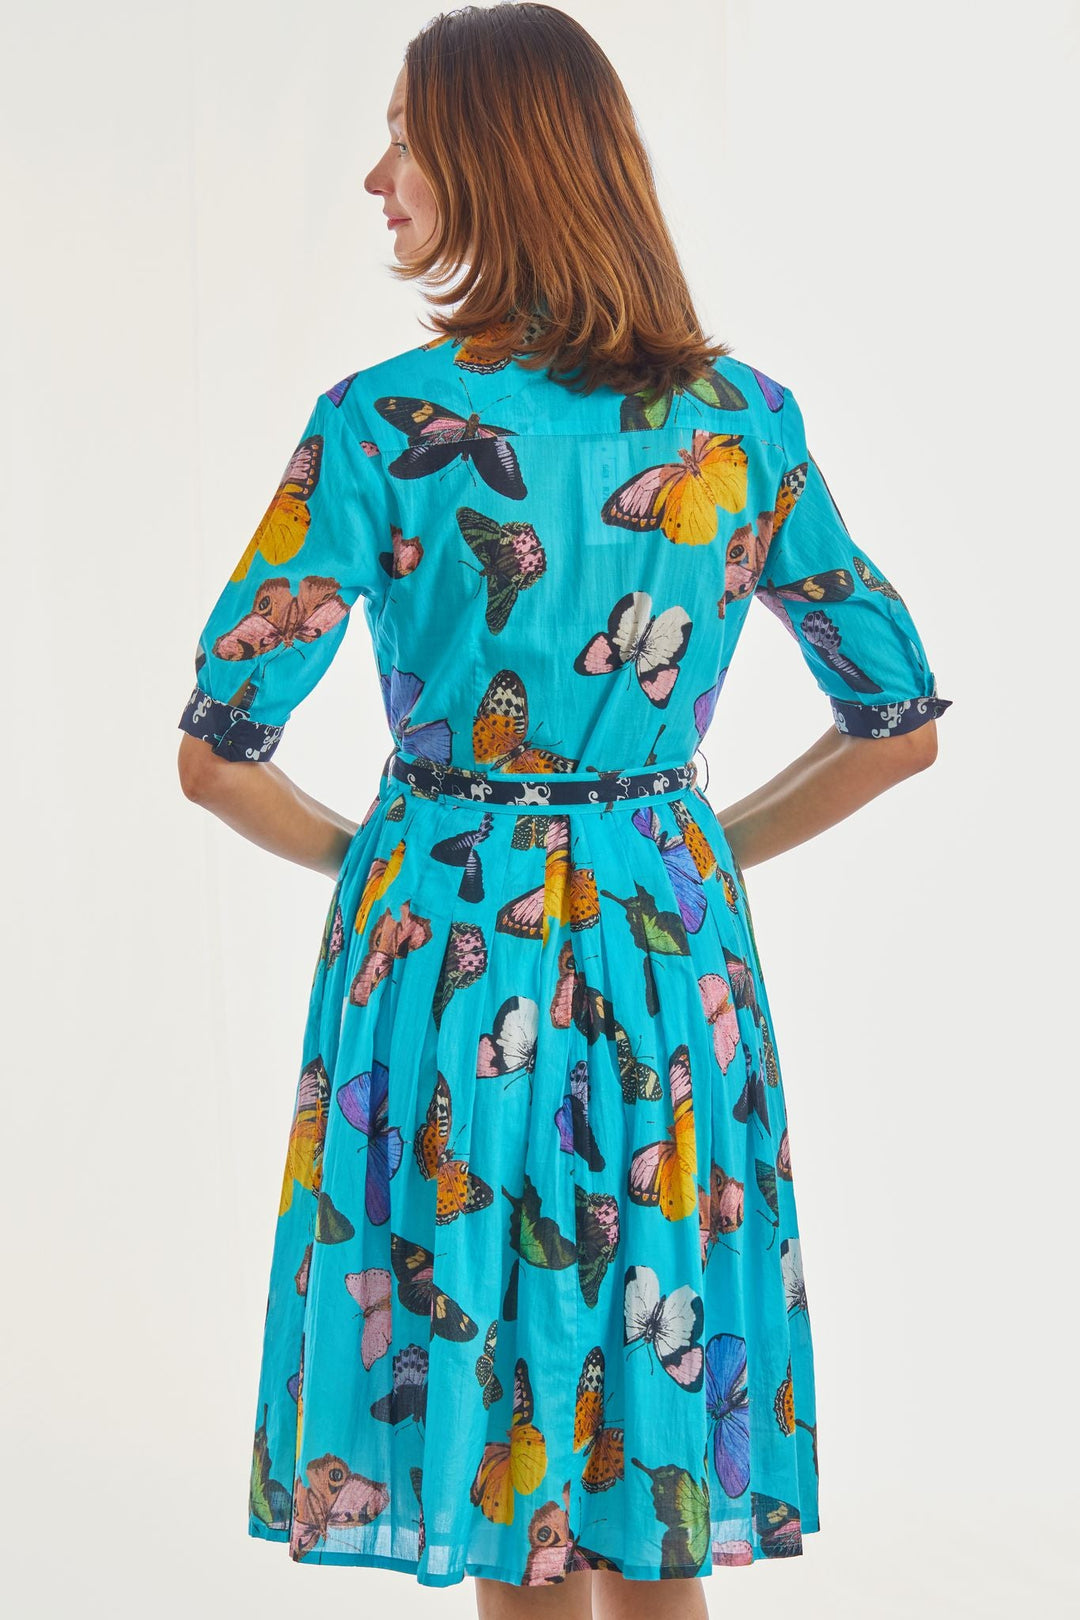 Dizzy Lizzie Mrs Maisel Dress Turquoise Butterflies